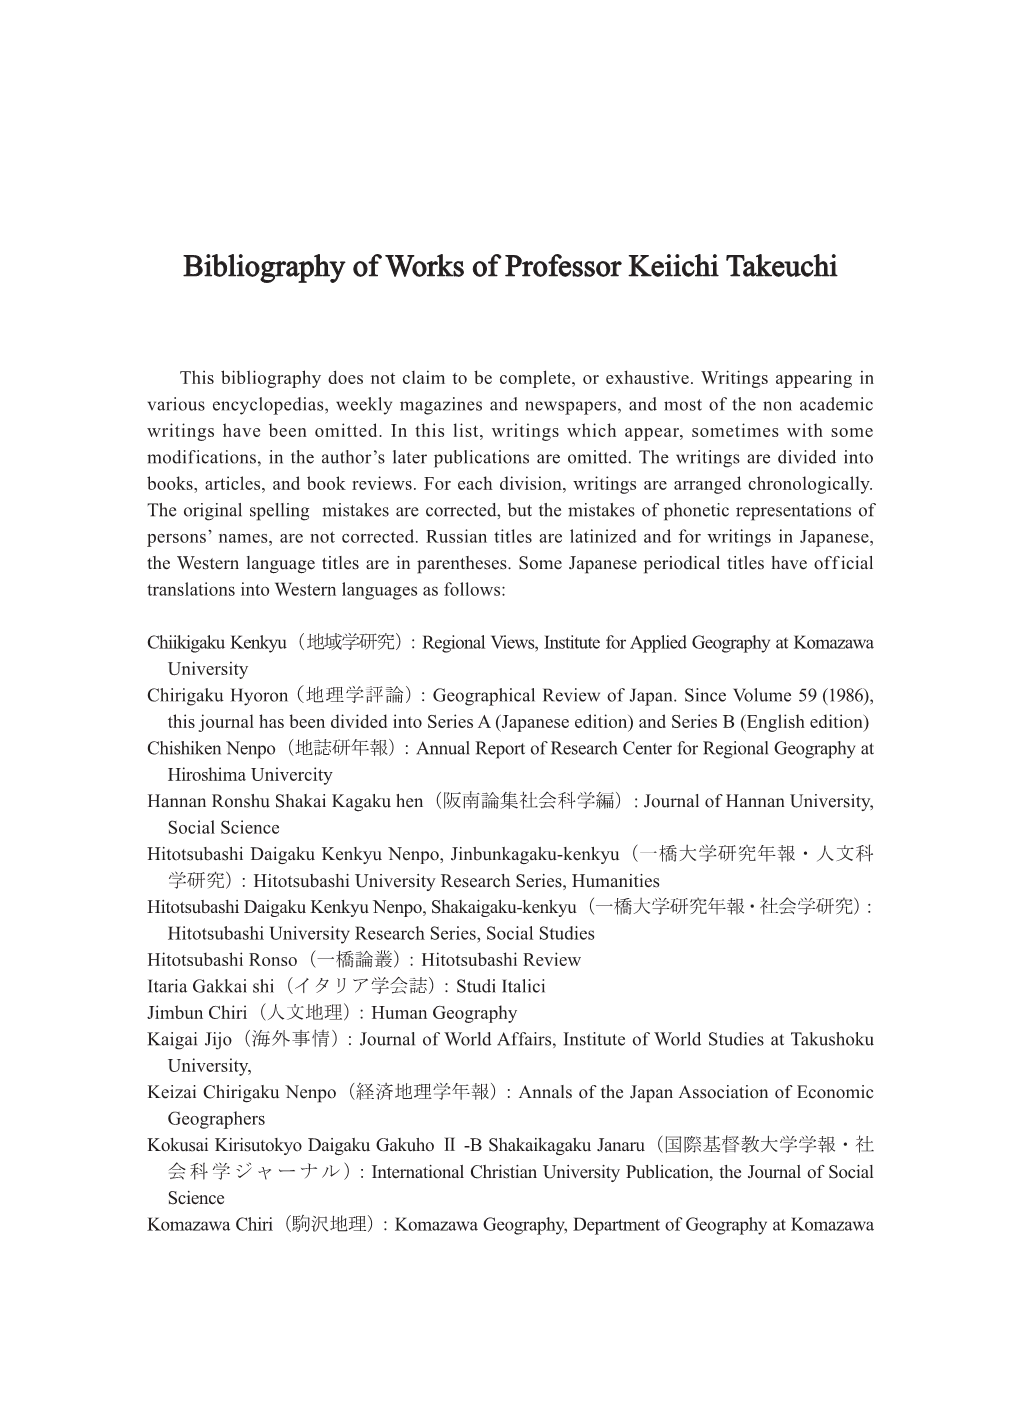 Bibliography of Works of Professor Keiichi Takeuchi